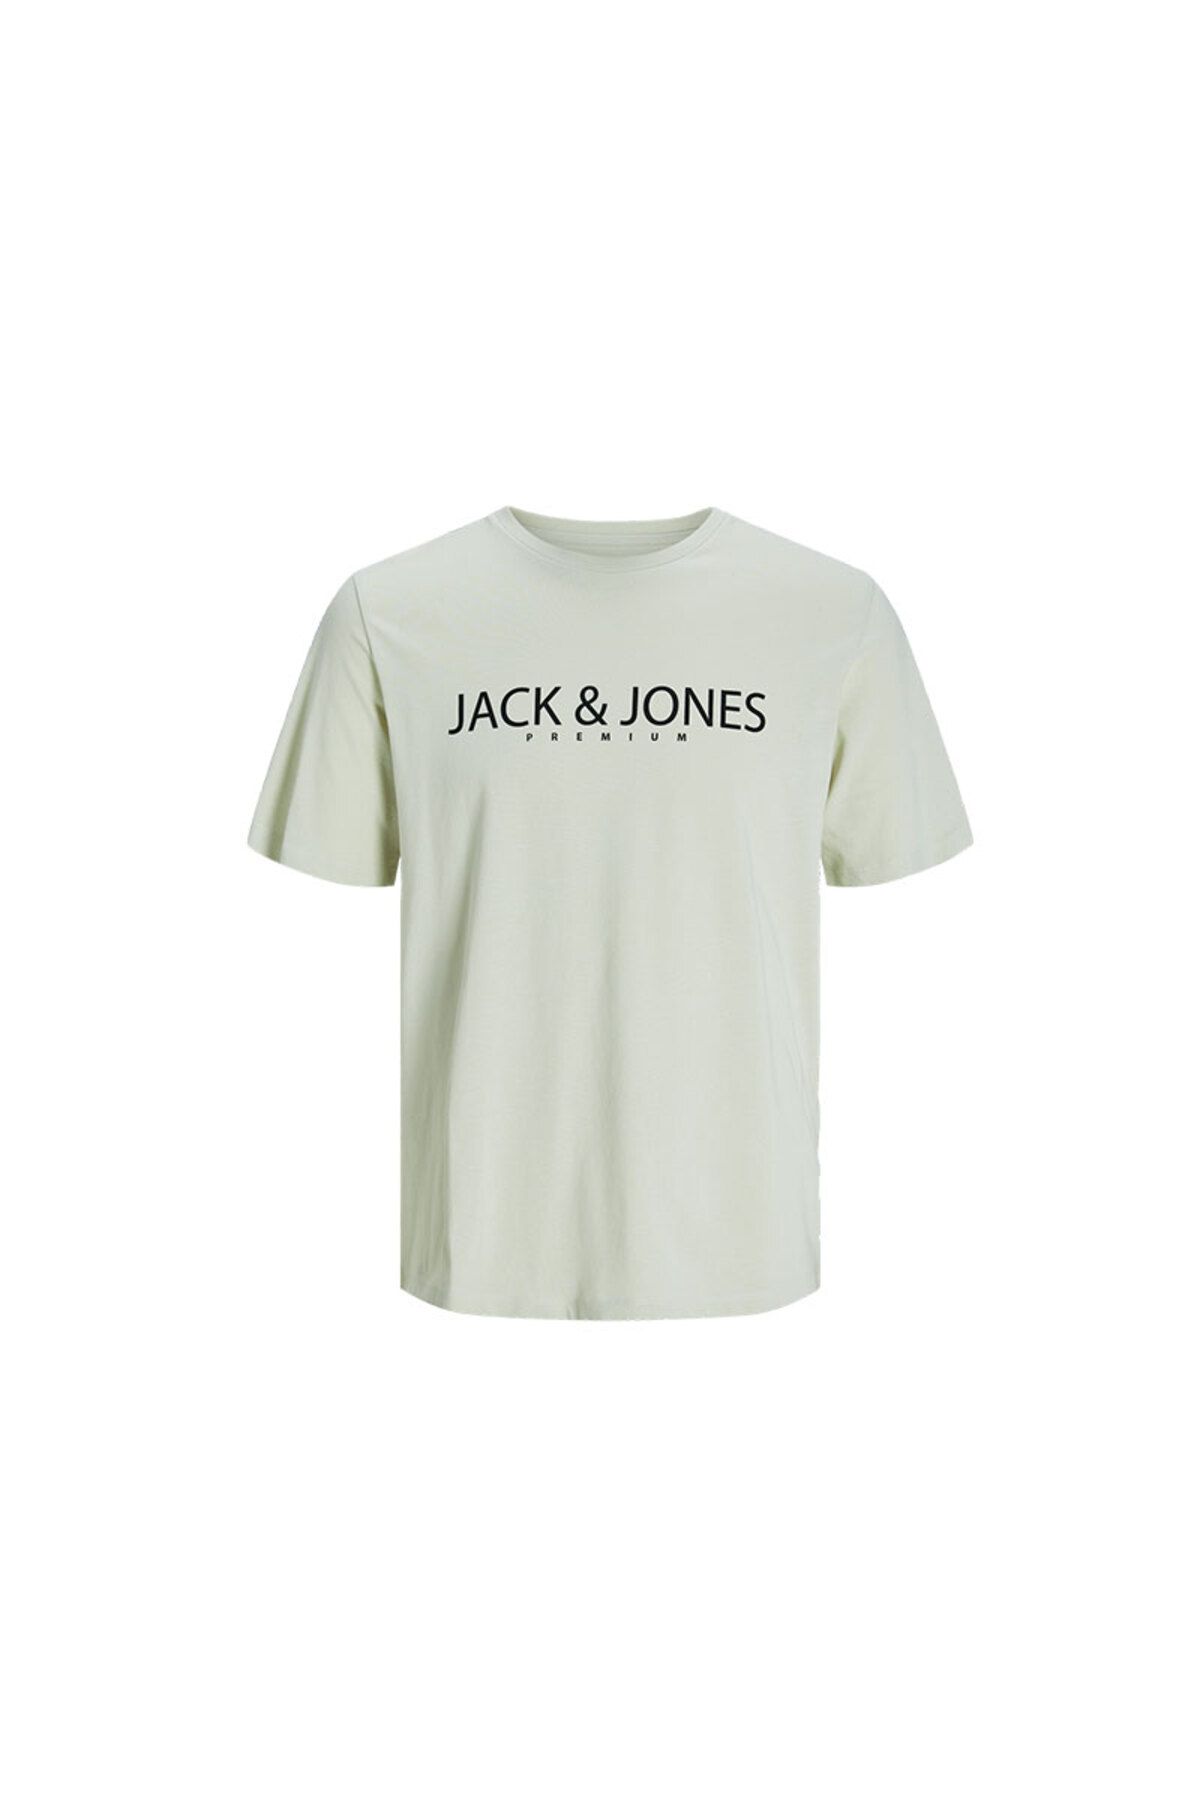 Jack & Jones Jprblajack Ss Tee Crew Neck Fst Ln